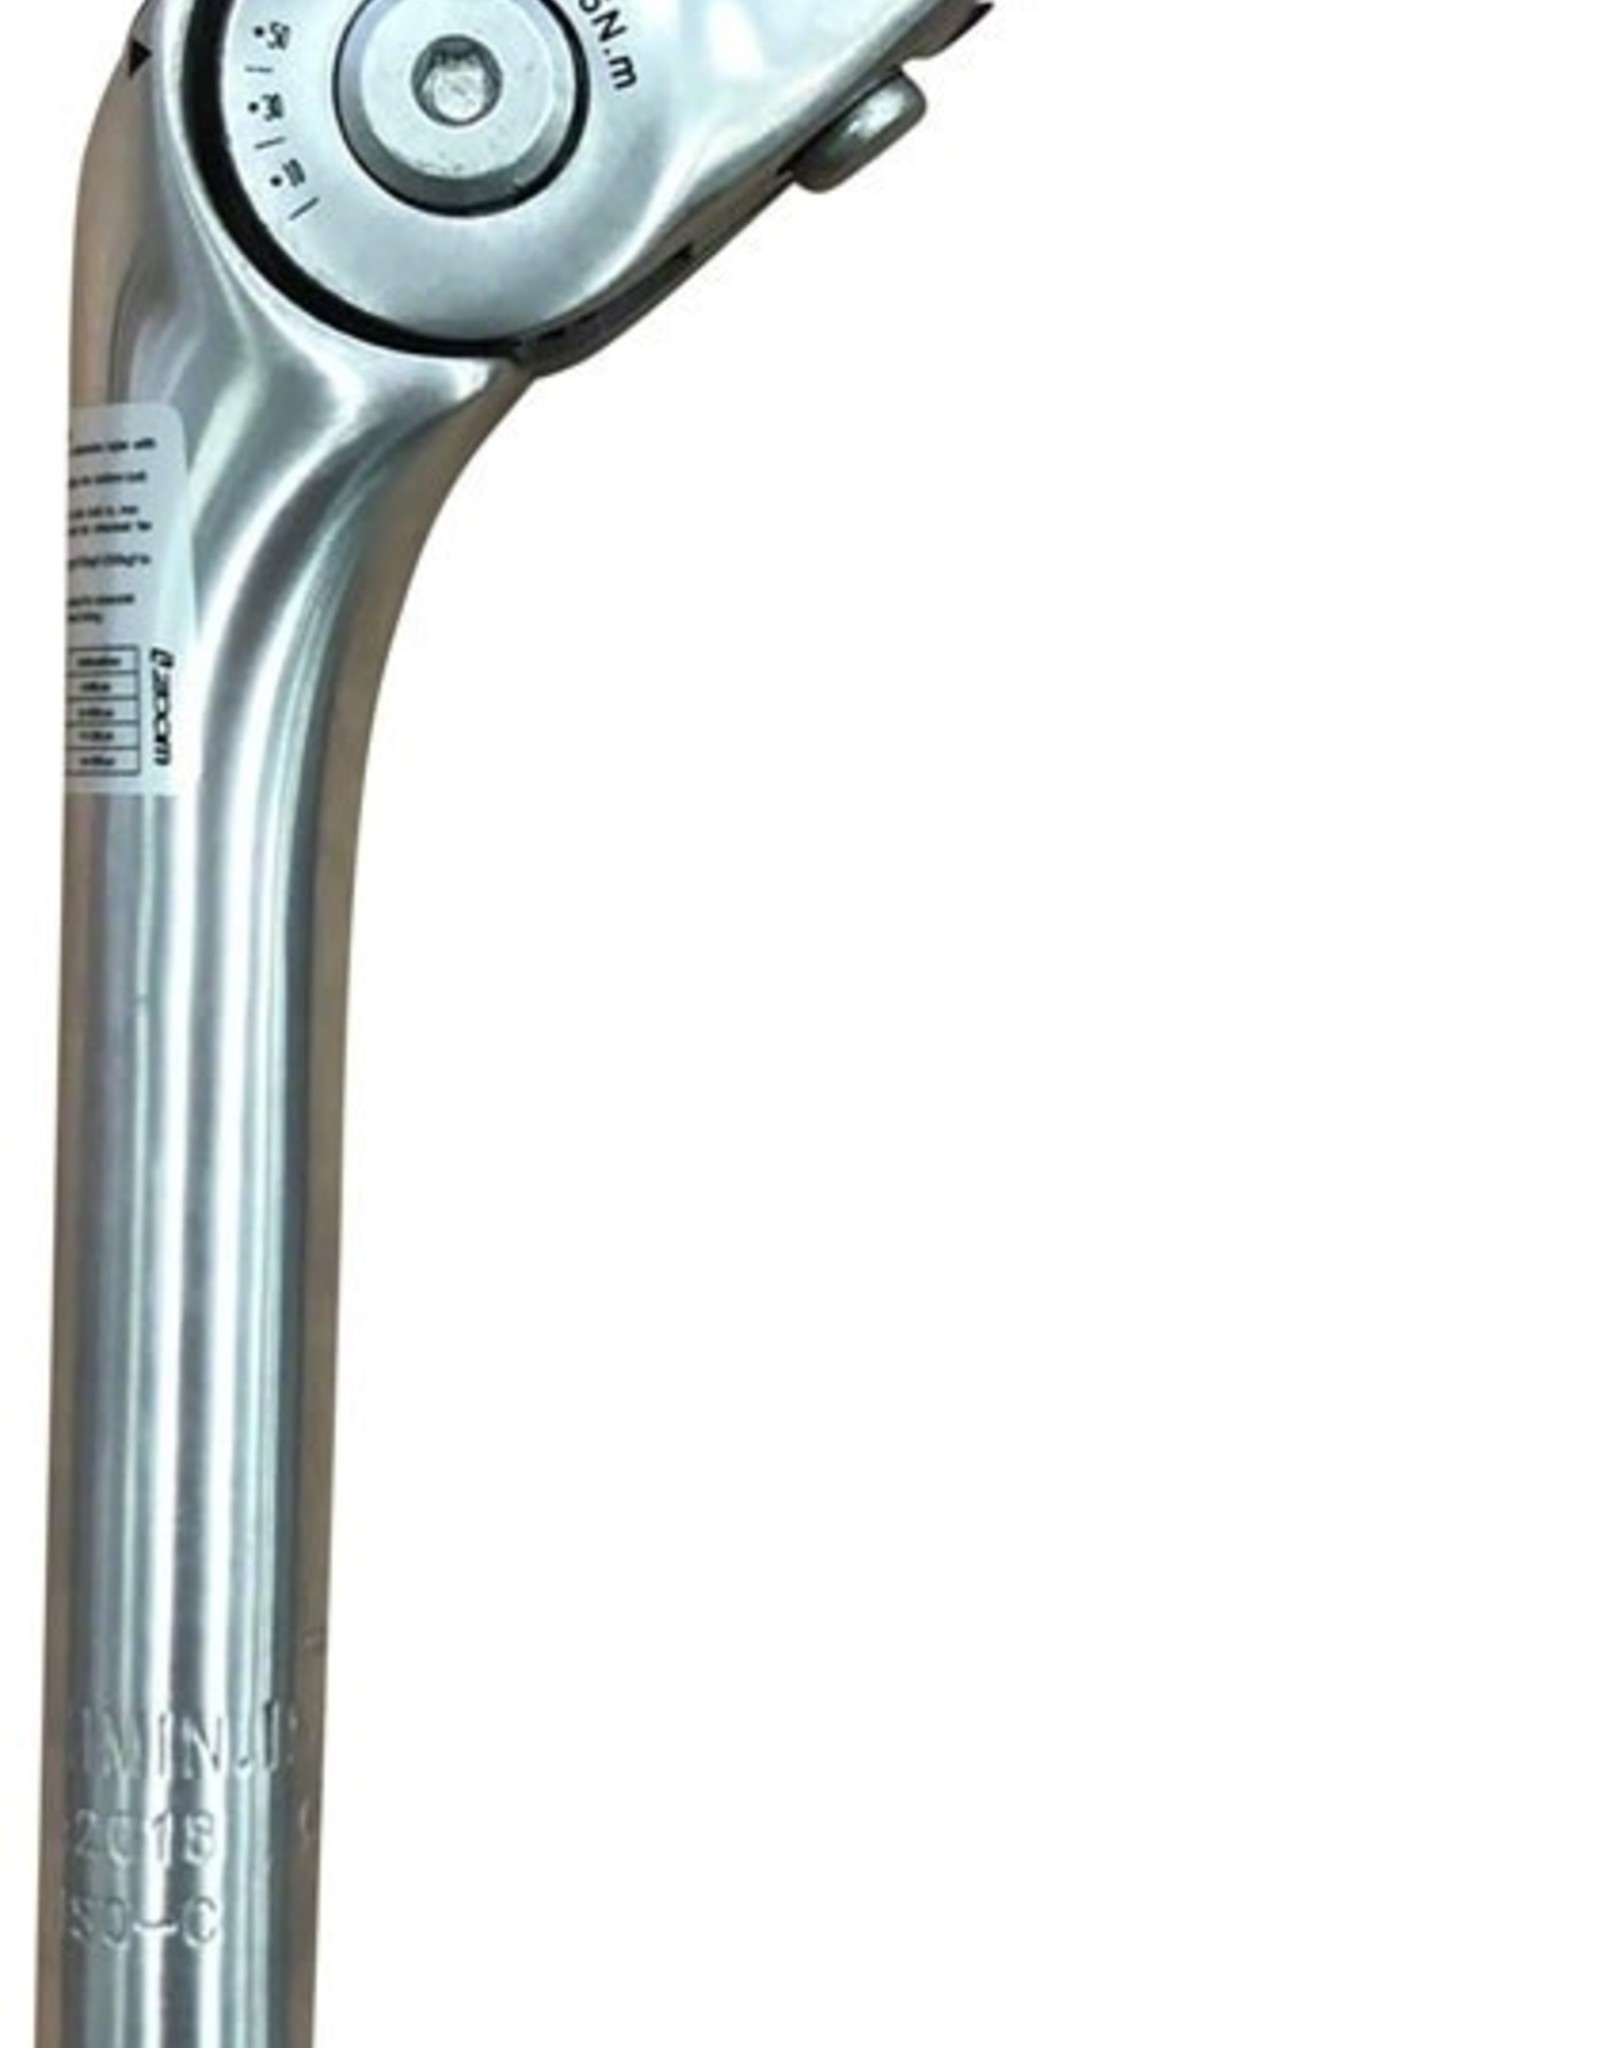 Zoom Quick Comfort Adjustable Stem - 110mm, 25.4 Clamp, Adjustable 80-150deg, 22.2-24tpi Quill, Aluminum, Silver